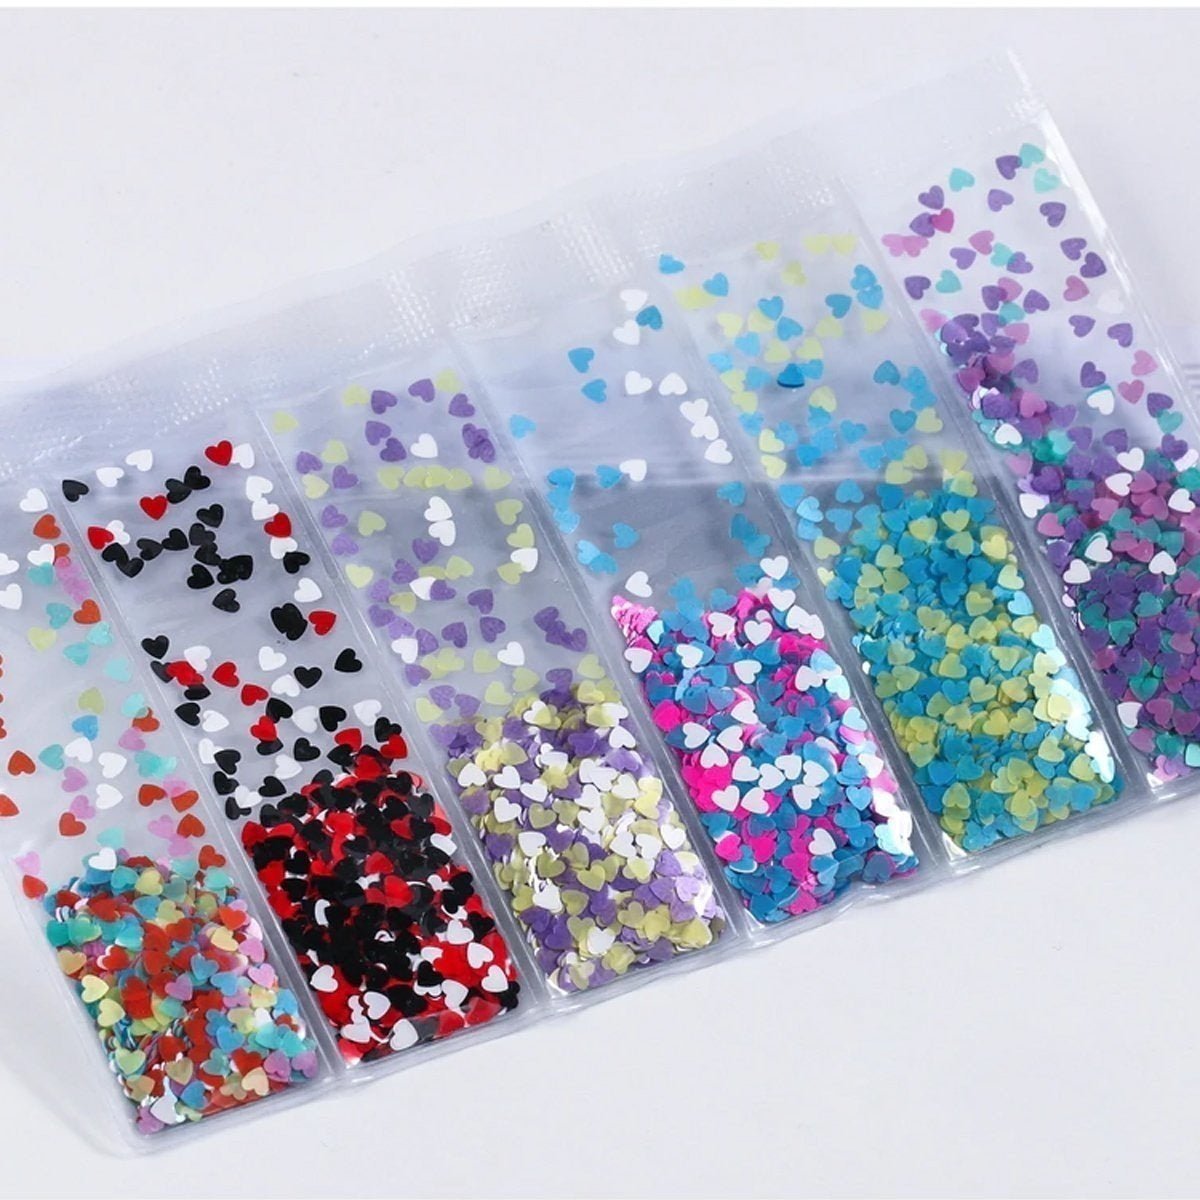 6 Bags Mixed Nail Glitter Powder Sequins Colourful Nail Flakes 10g - 4 - Asia Sell